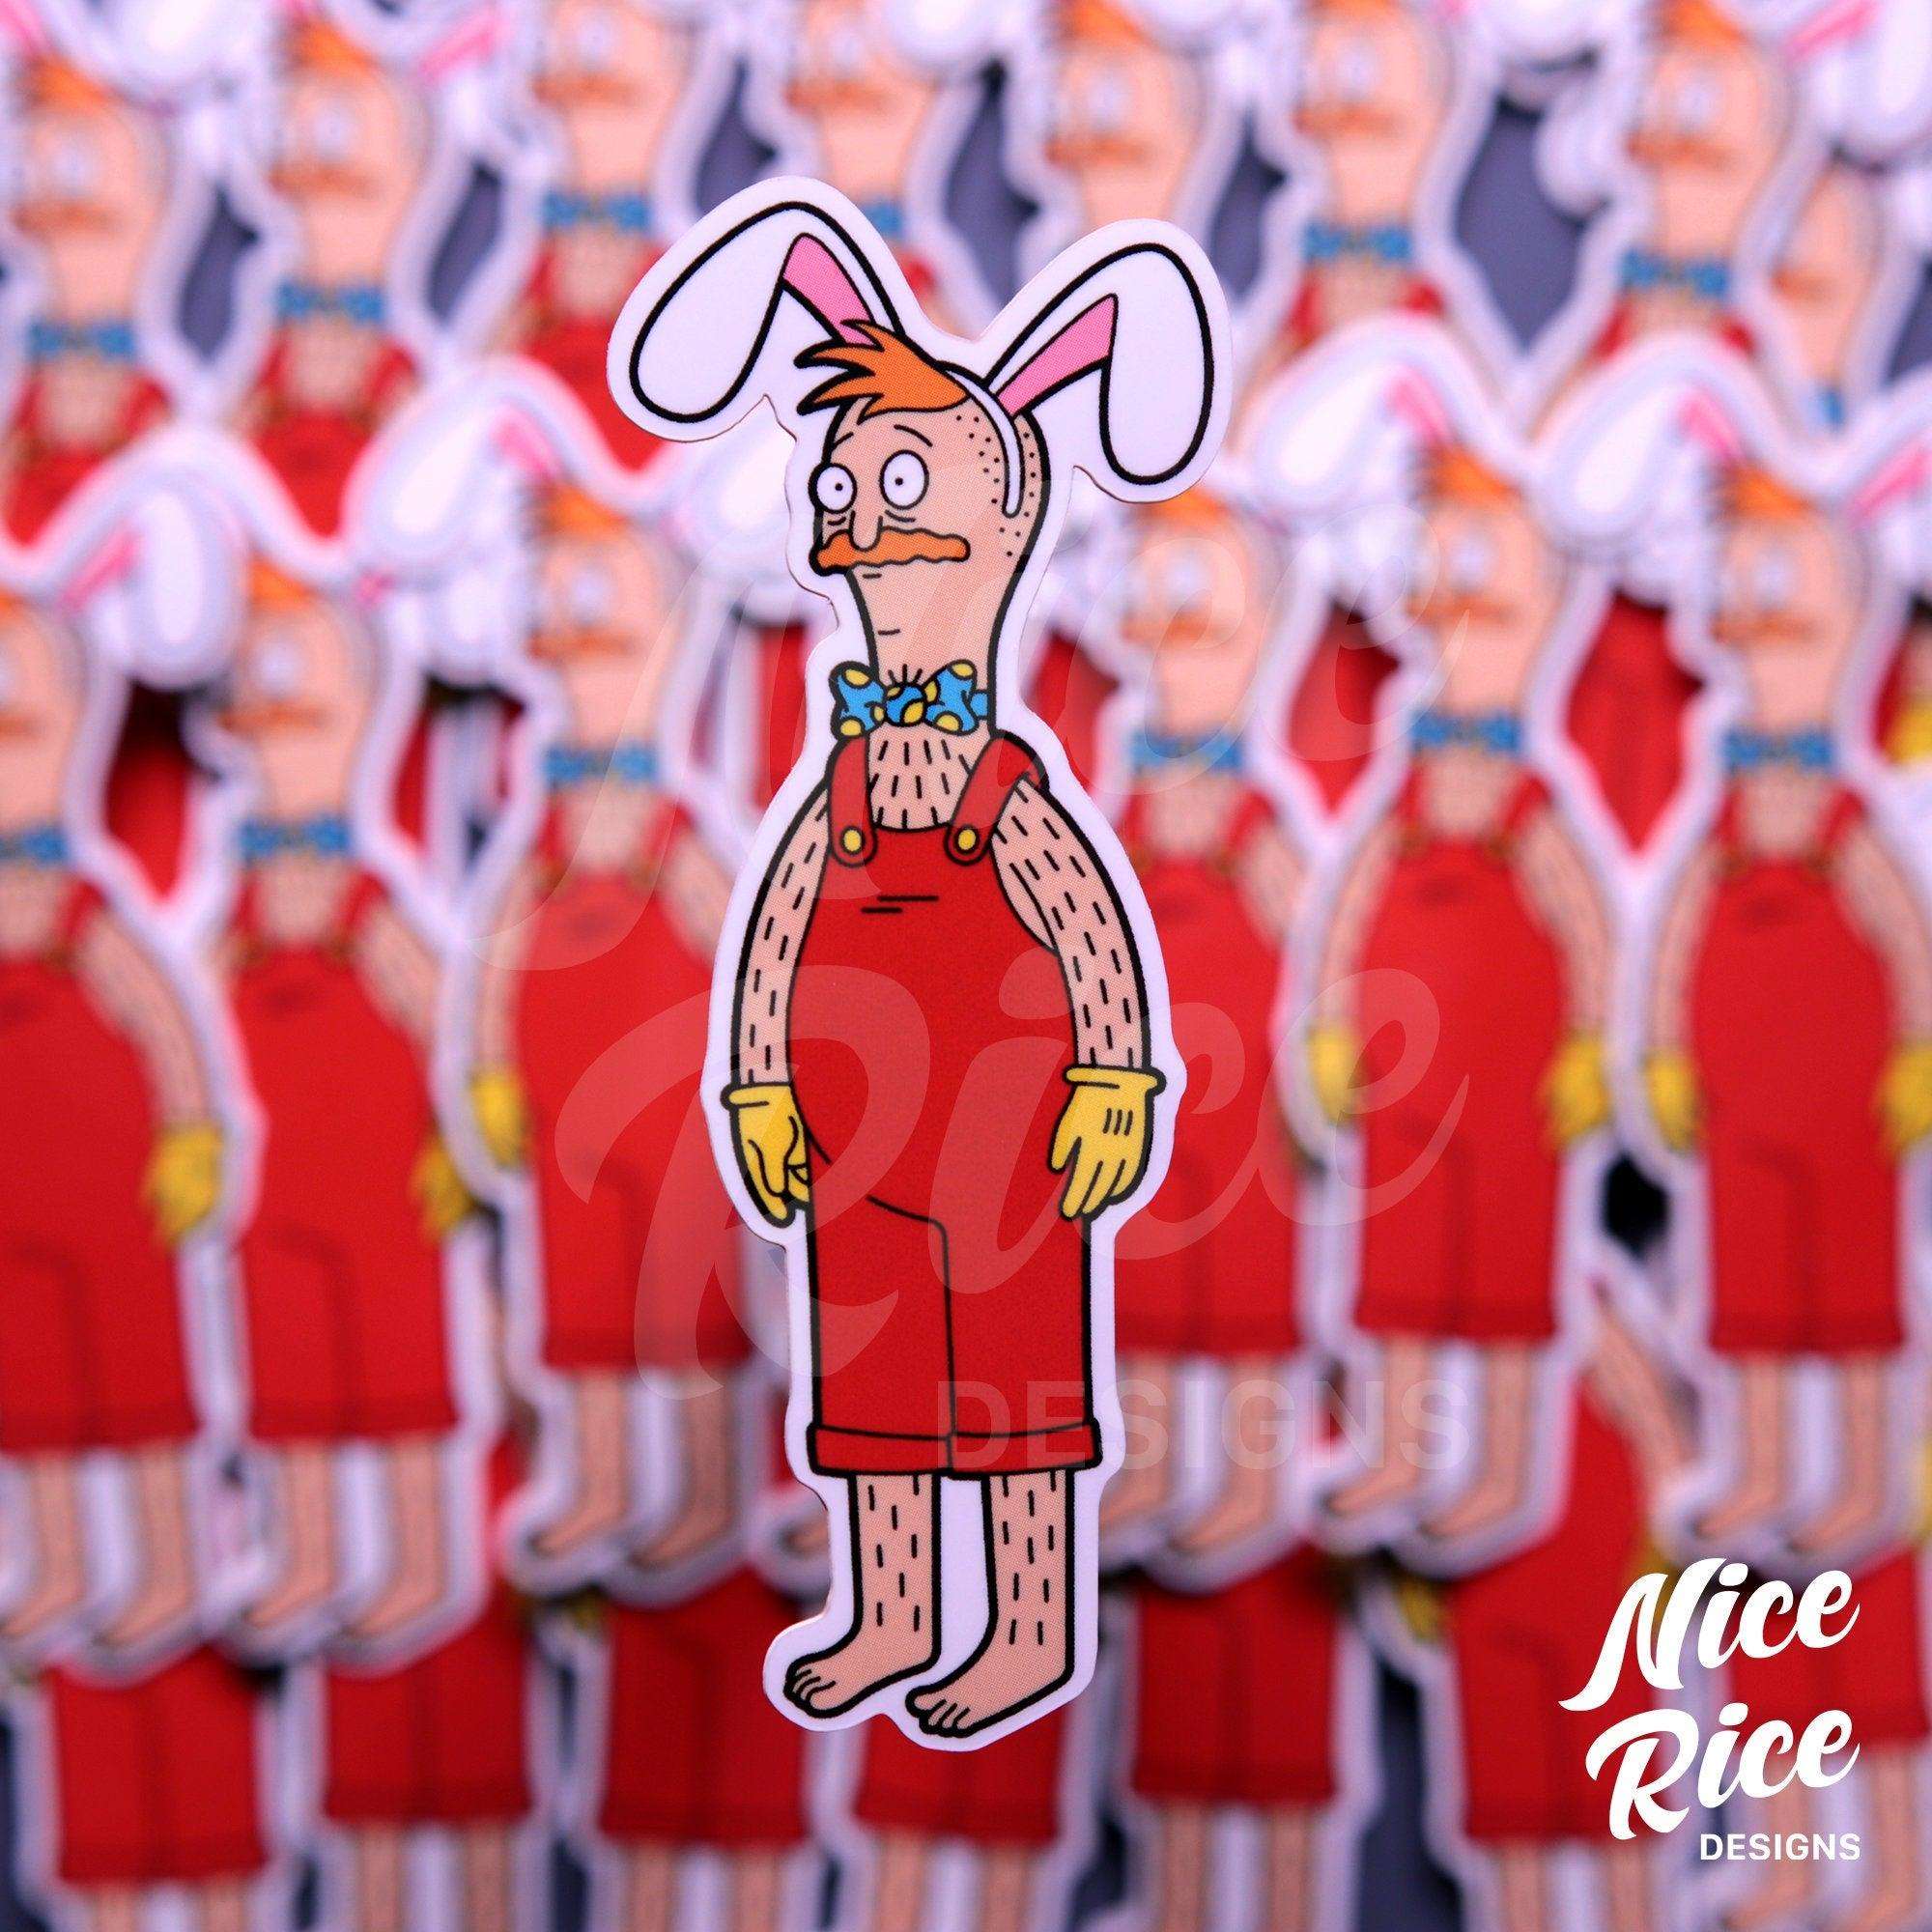 Bobby Rabbit Sticker (trio set) by Nice Rice Designs